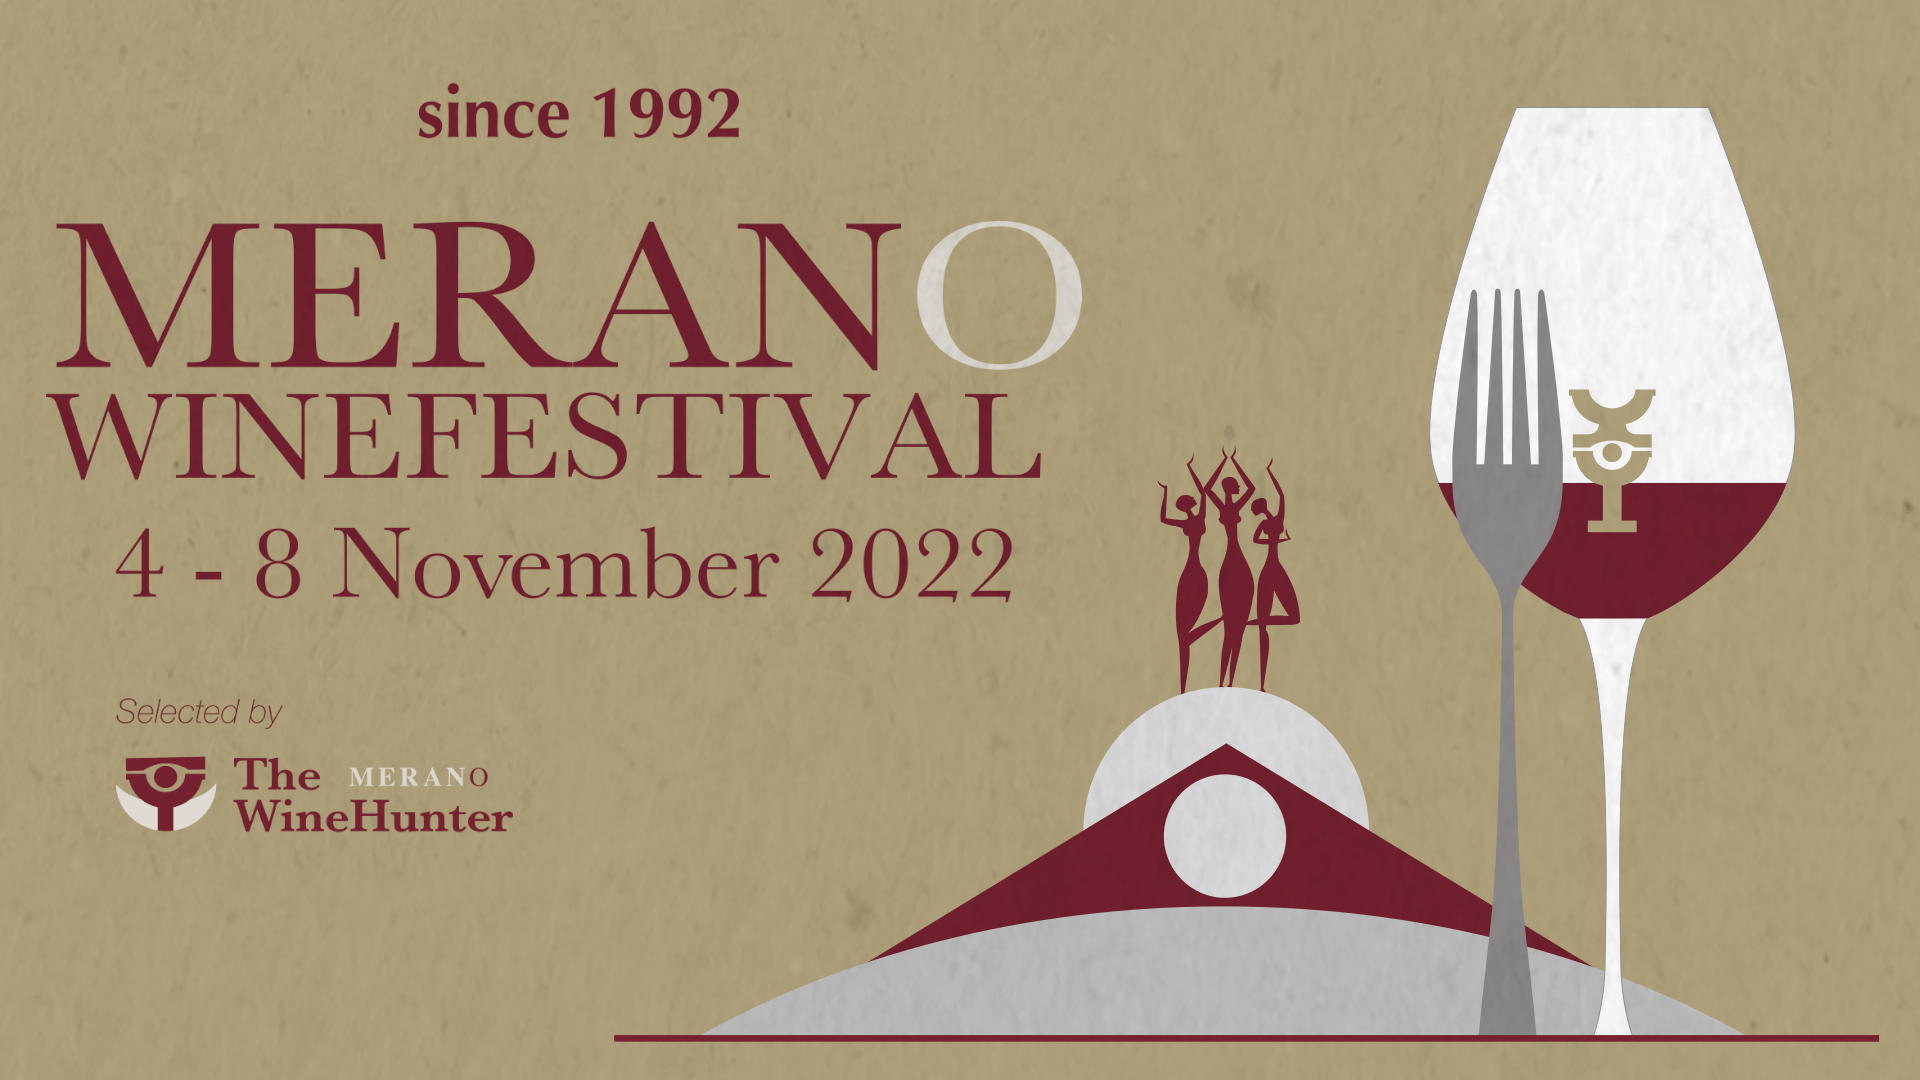 Merano WineFestival 4-8 November 2022